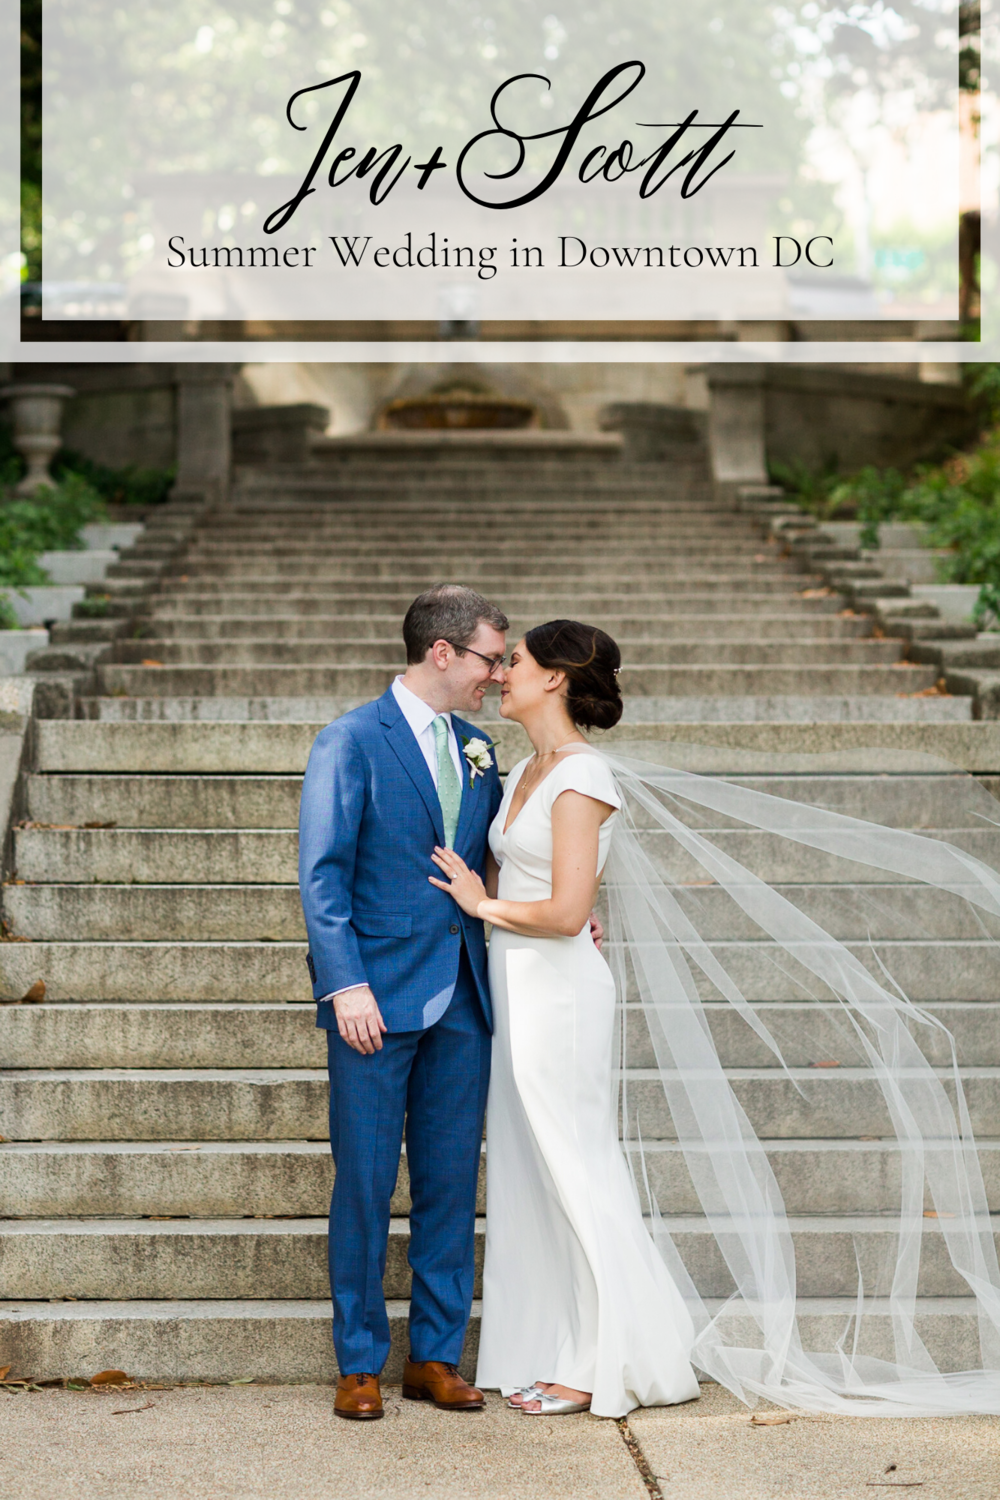 Jen + Scott Wedding Feature Cover.png